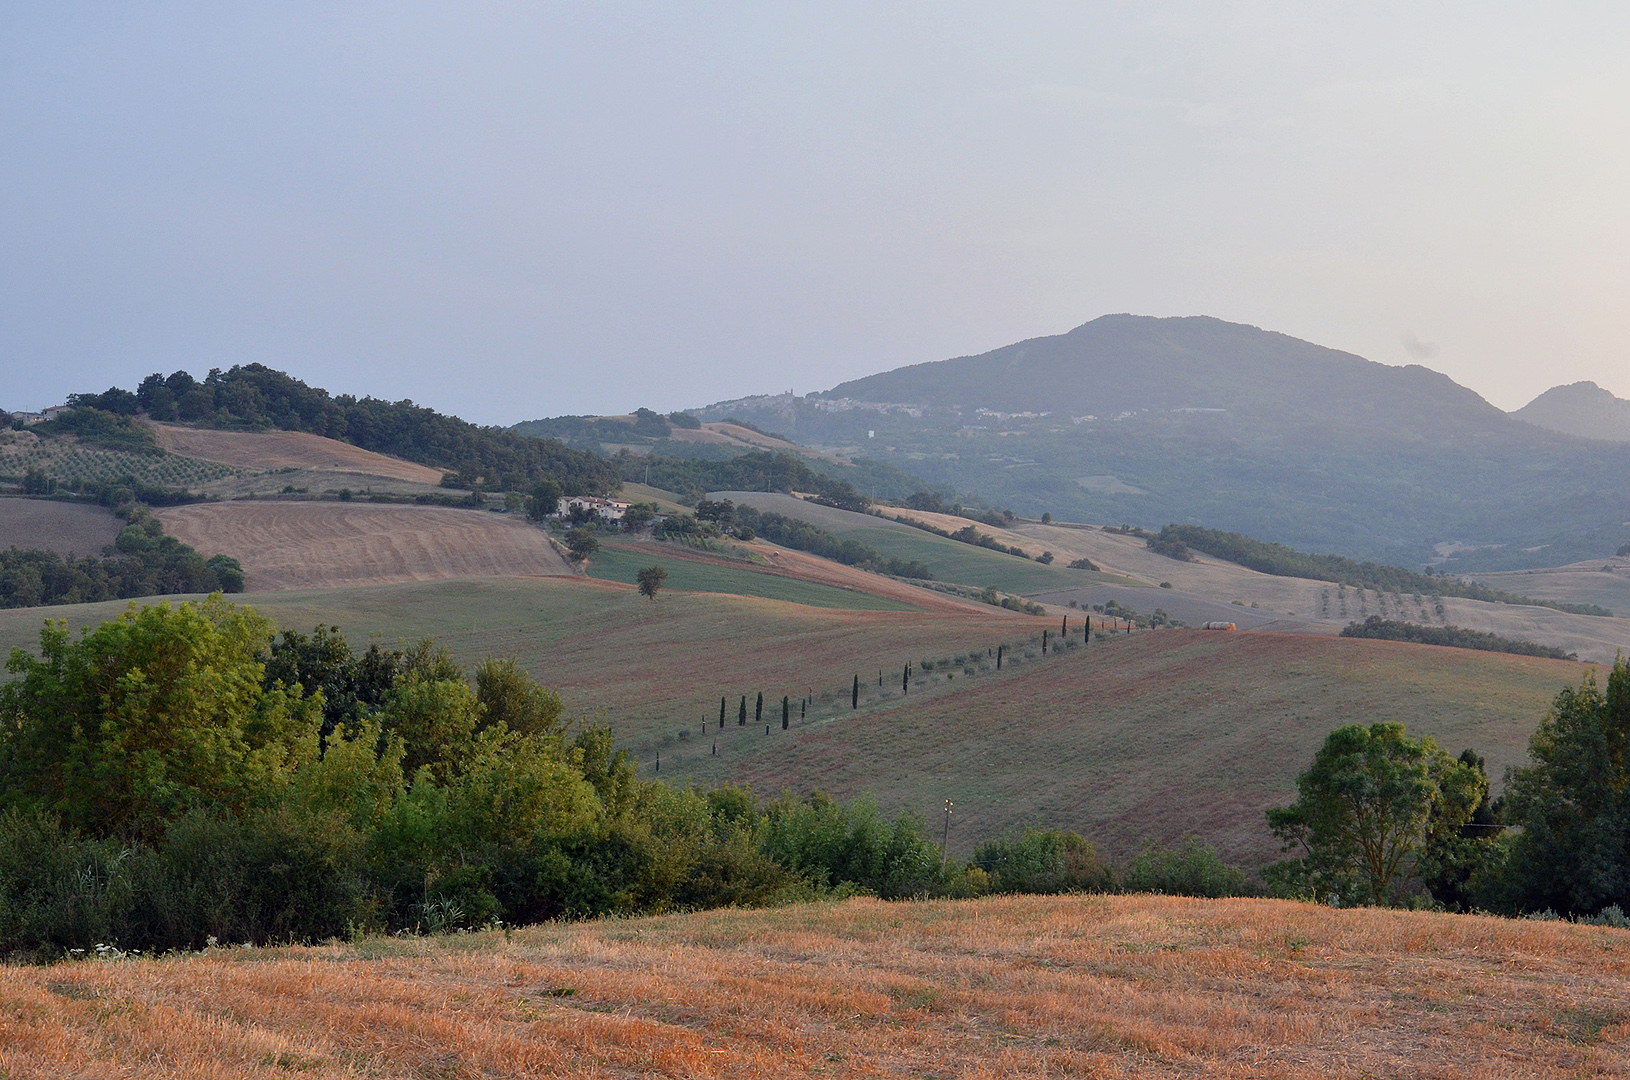 Landschap bij Radicofani (Si. Toscane, Itali); Landscape near Radicofani (Si. Tuscany, Italy)